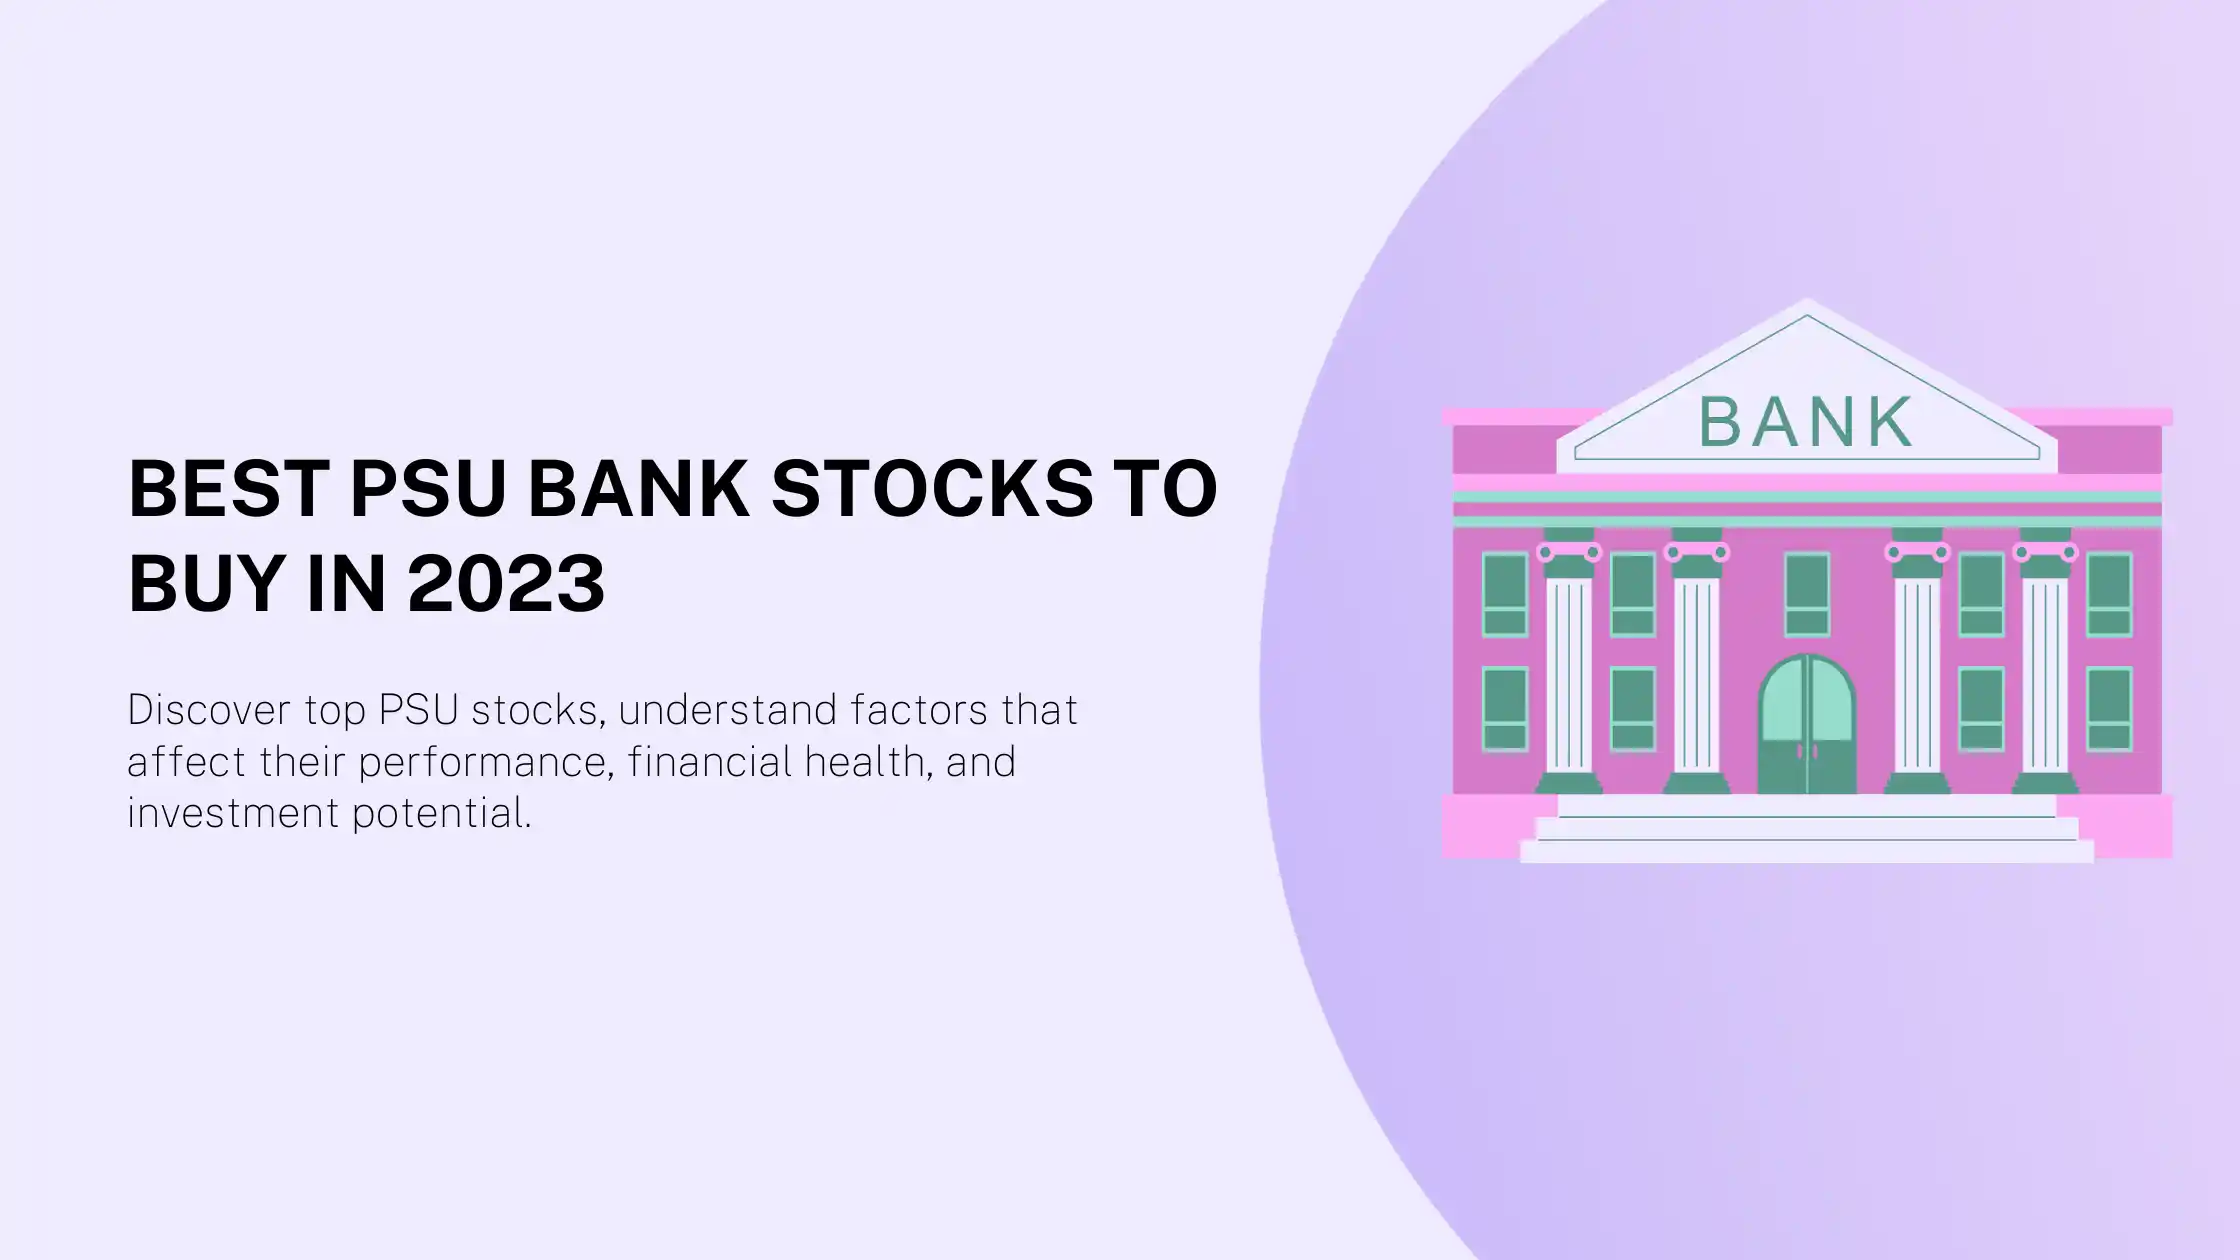 Best PSU Bank Stocks to Buy in 2023